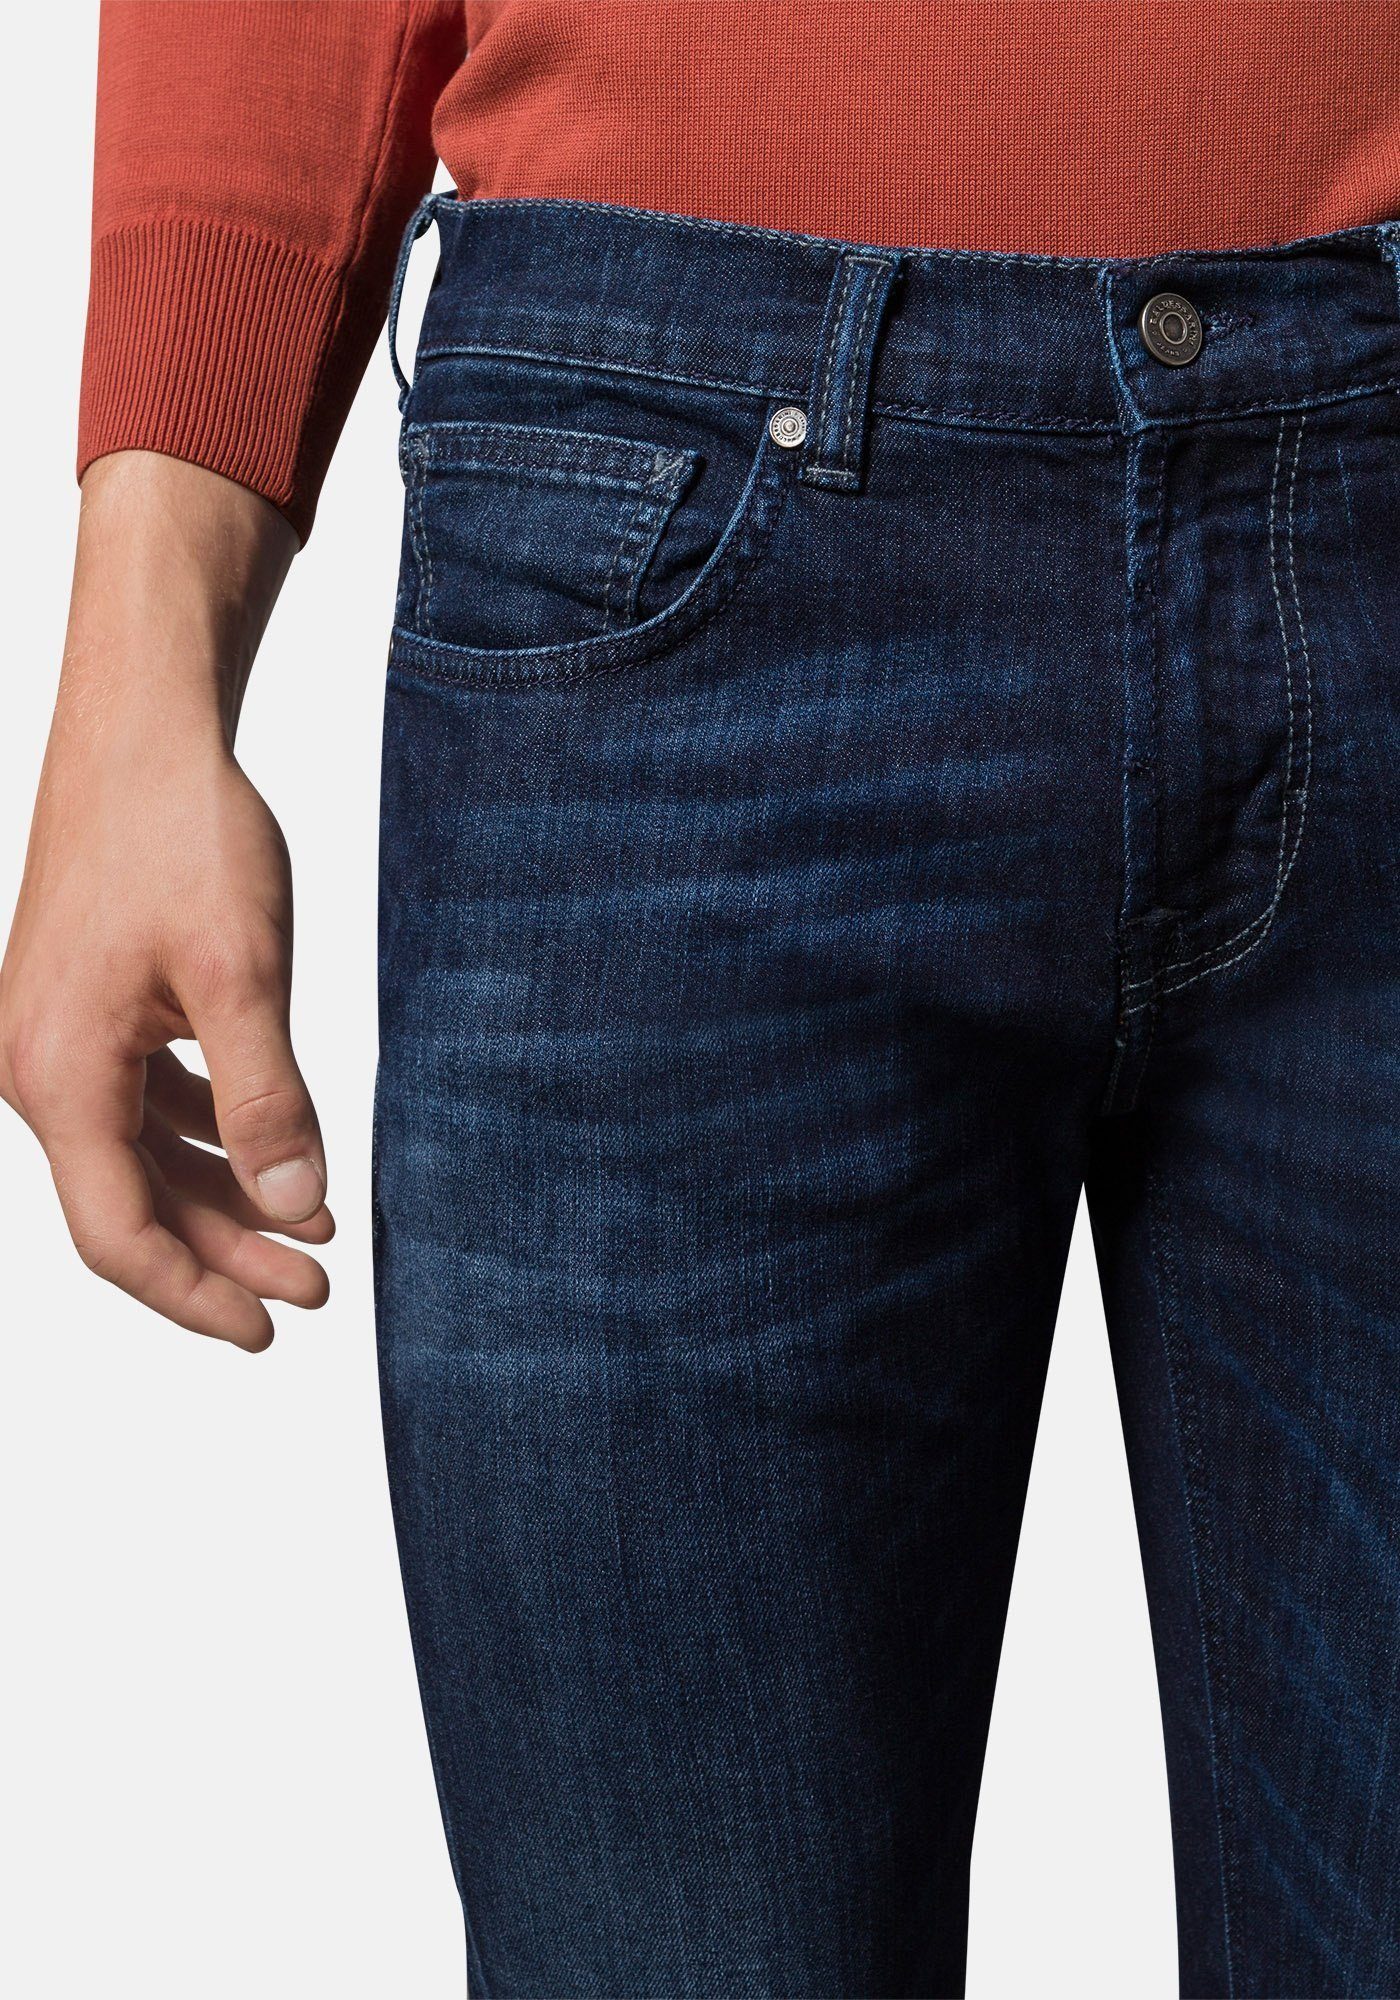 Baldessarinini BALDESSARINI 5-Pocket-Jeans John Movimento used sw Stretch + Denim baffie dark blue